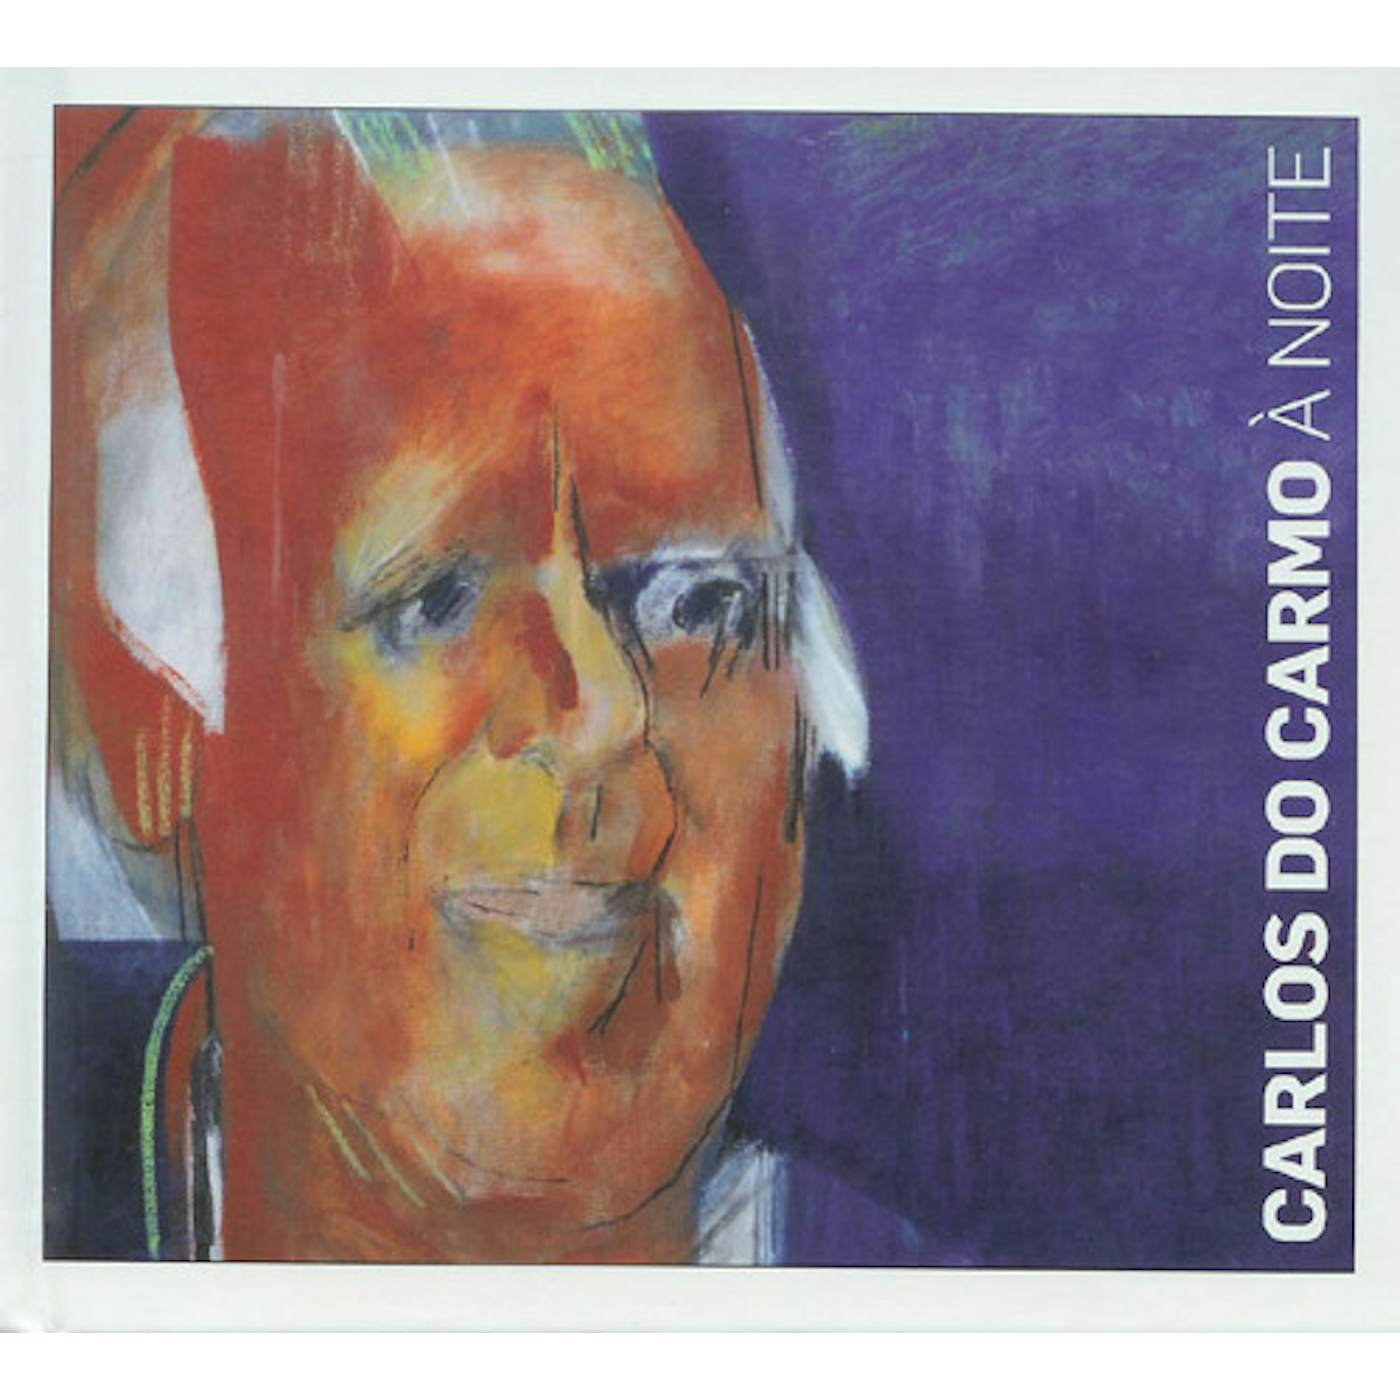 Carlos Do Carmo NOITE Vinyl Record